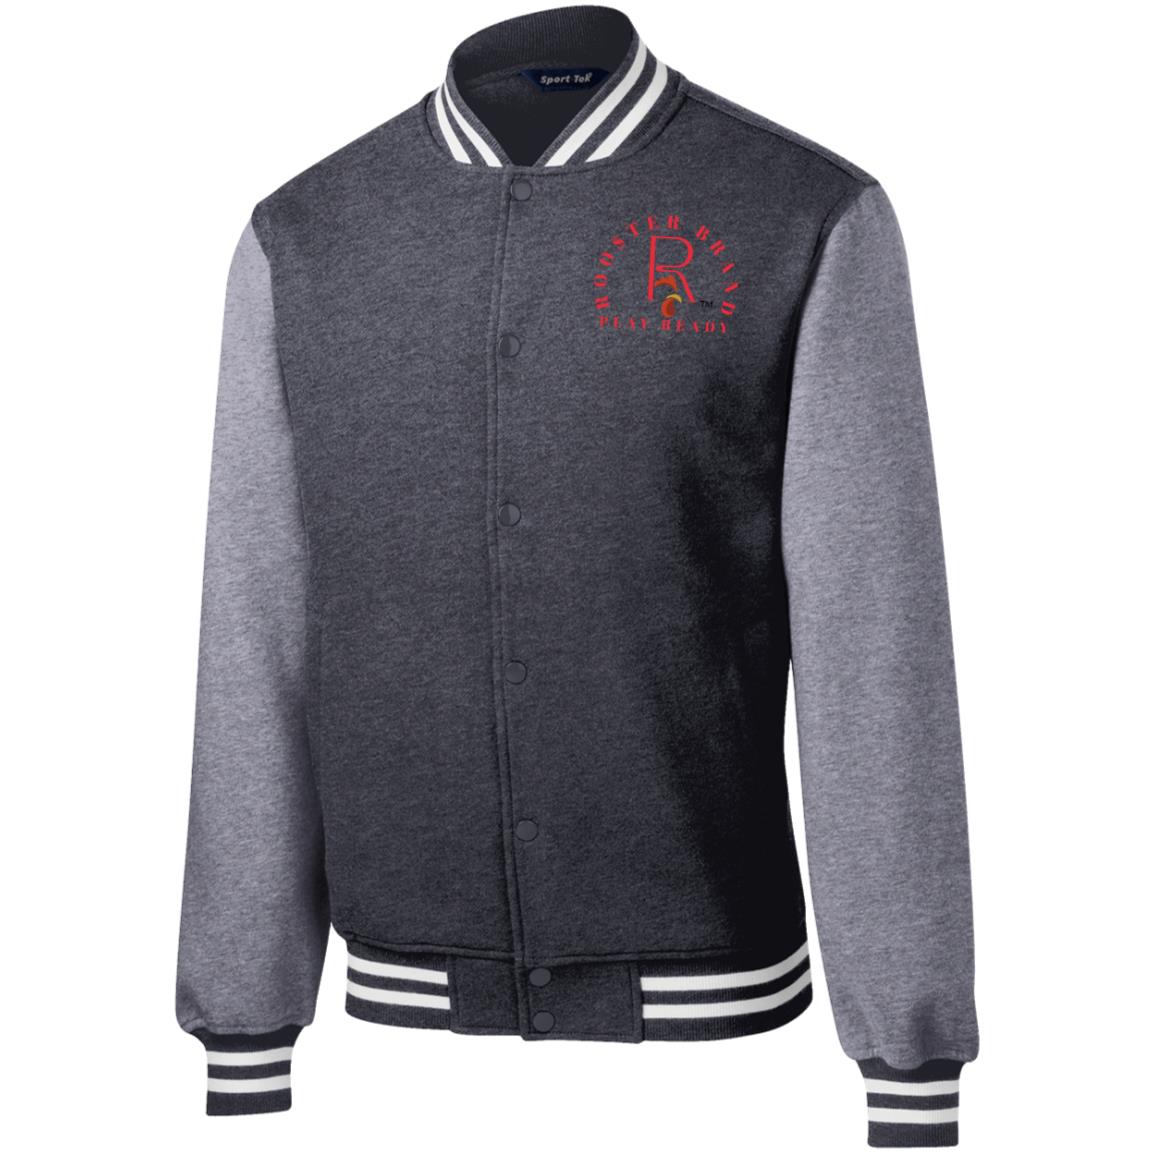 Roo$ter Brand Fleece Letterman Jacket